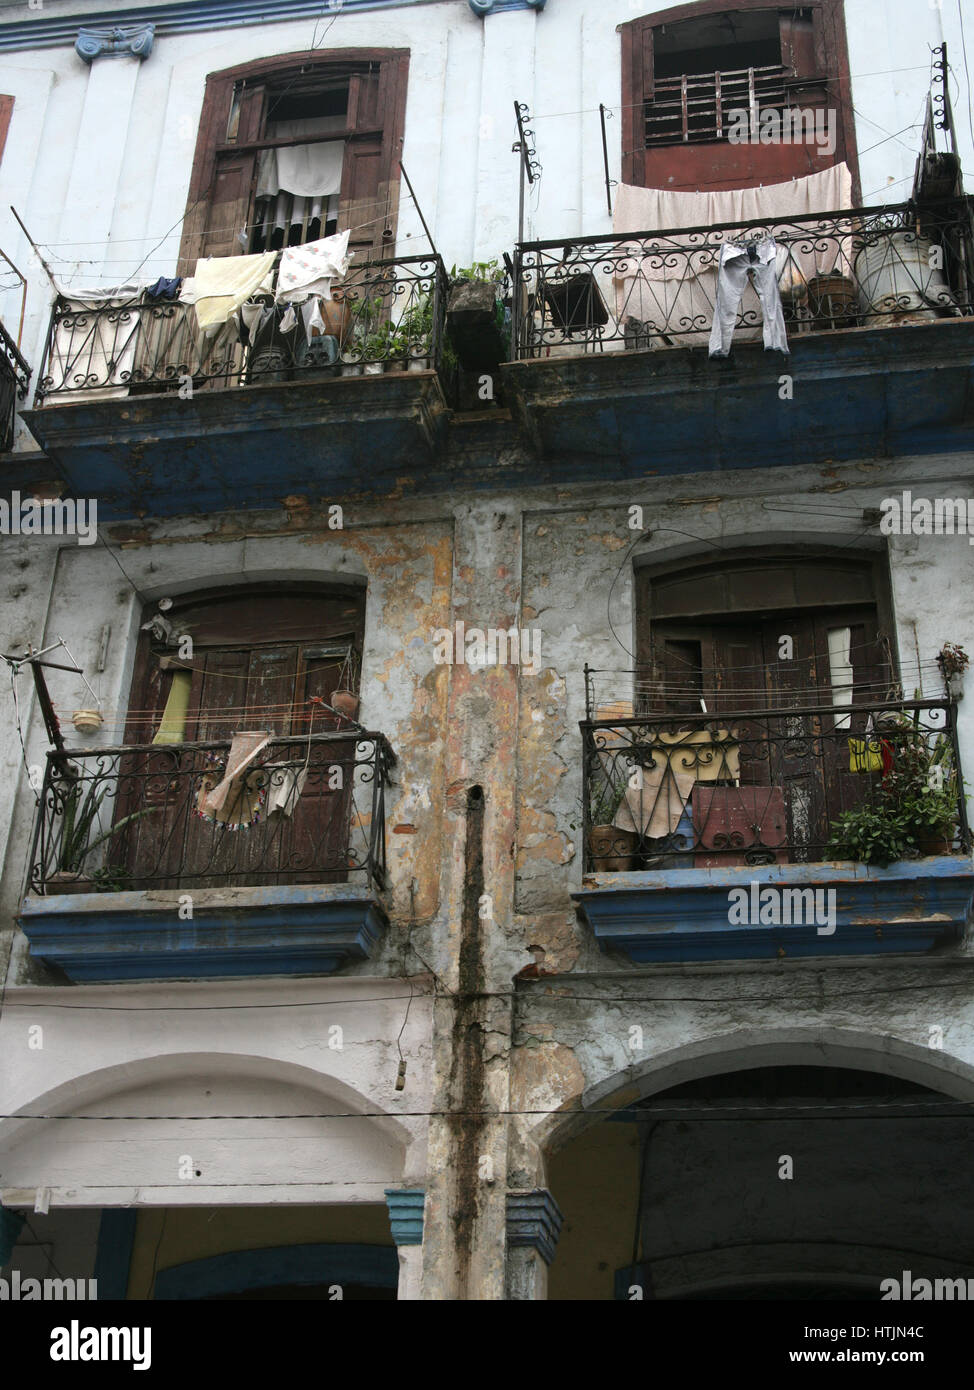 Havana architecture. Apartment blocks( La Habana), Cuba. UNESCO World Heritage Site.  Former glory of colonial architecture.Poverty. Stock Photo